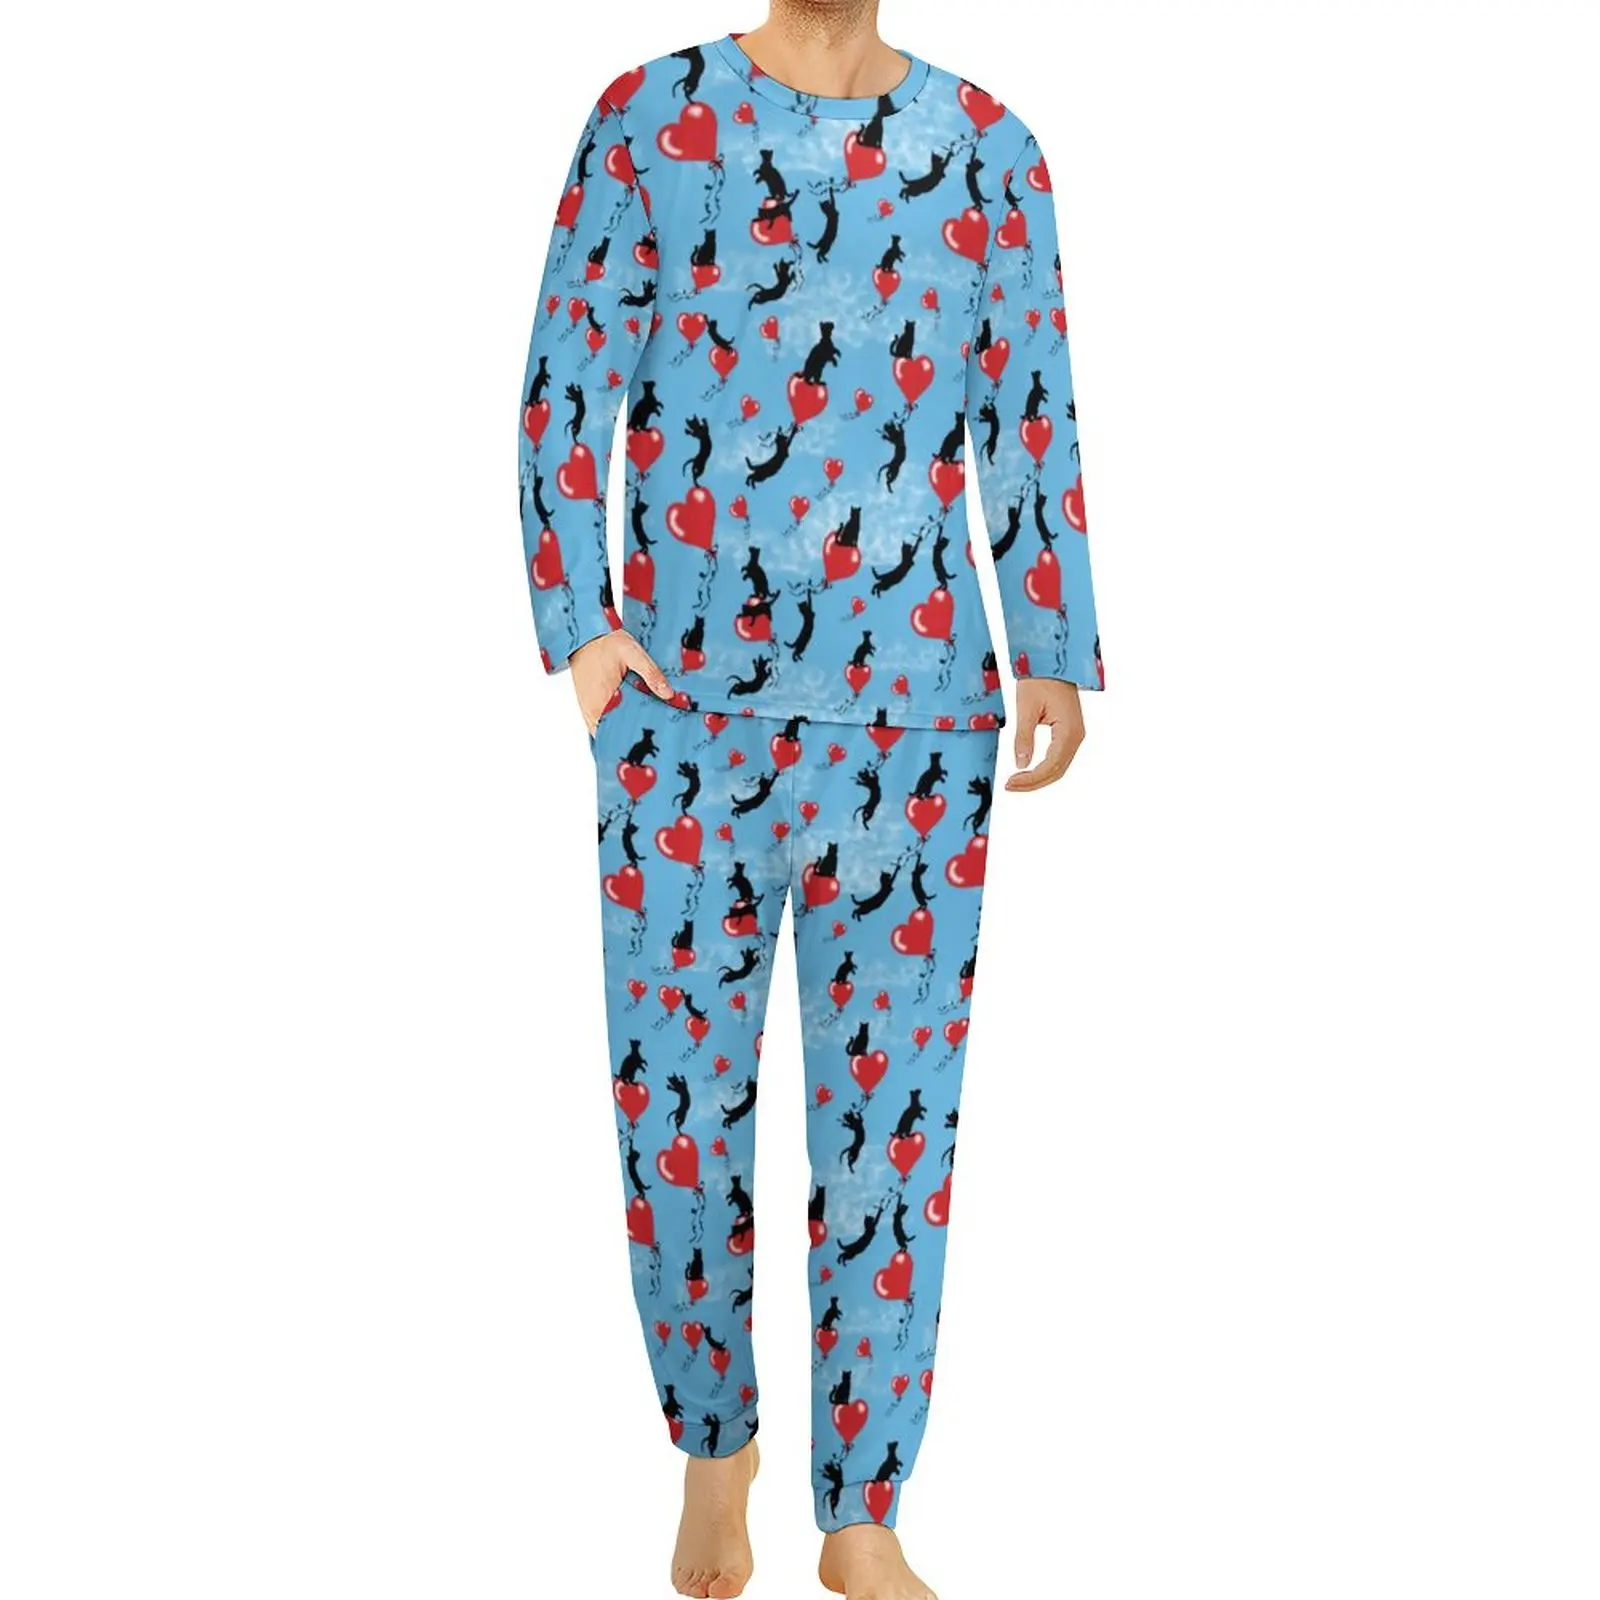 Flying Red Balloon Pajamas Black Cat Men Long Sleeve Cute Pajama Sets 2 Pieces Bedroom Spring Graphic Sleepwear Gift Idea